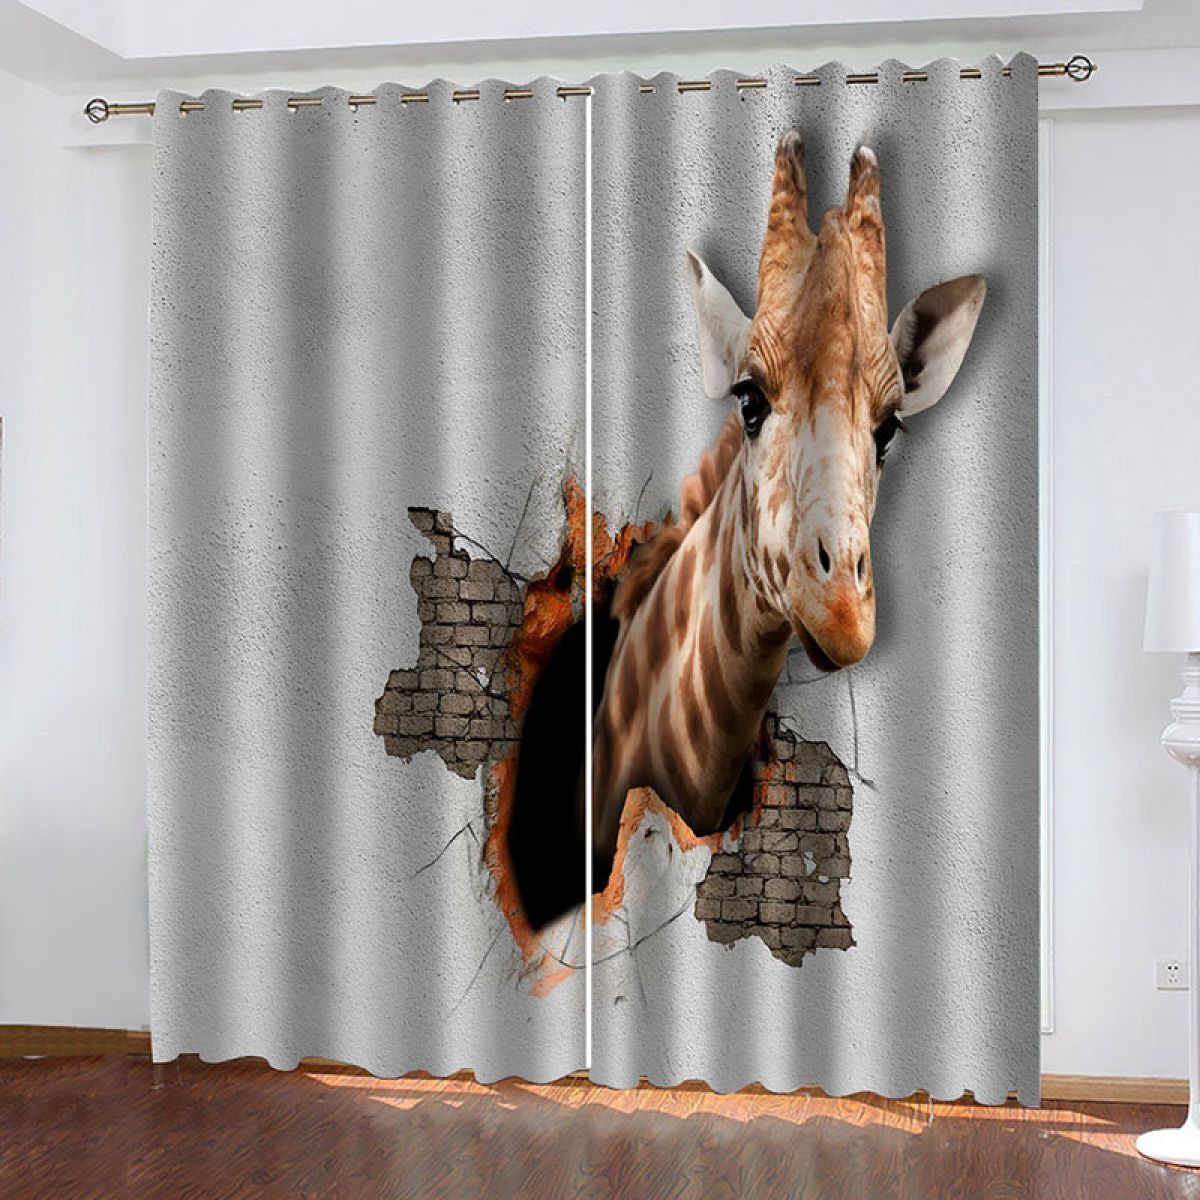 Giraffe Breaking Into The Wall Printed Window Curtain Home Decor